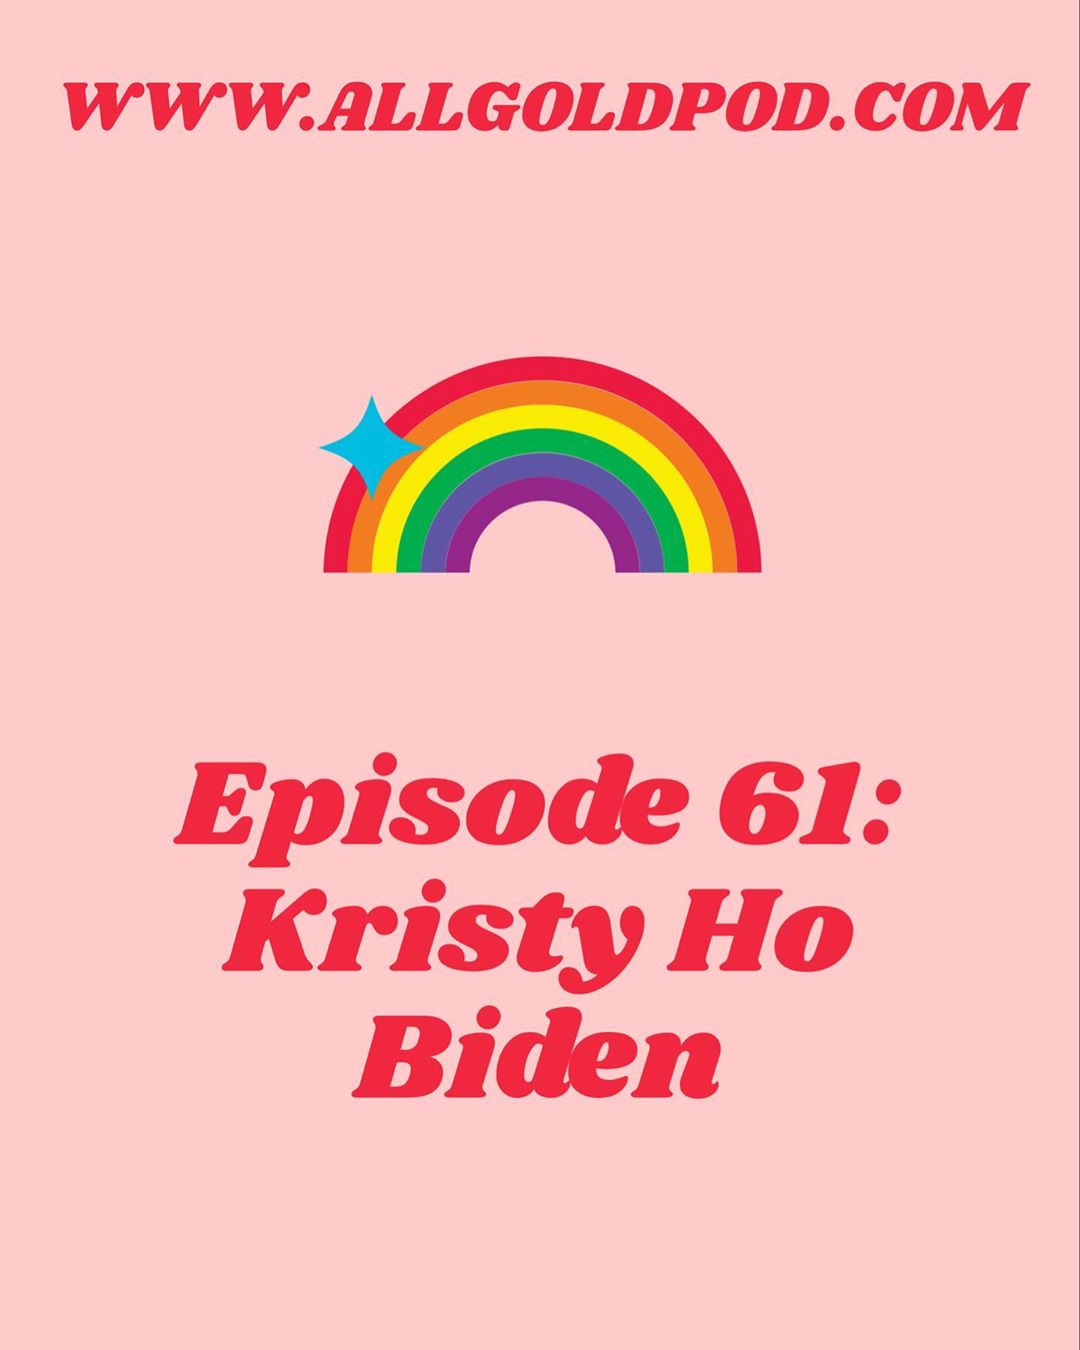 All Gold Everything | Episode 61: Kristy Ho Biden